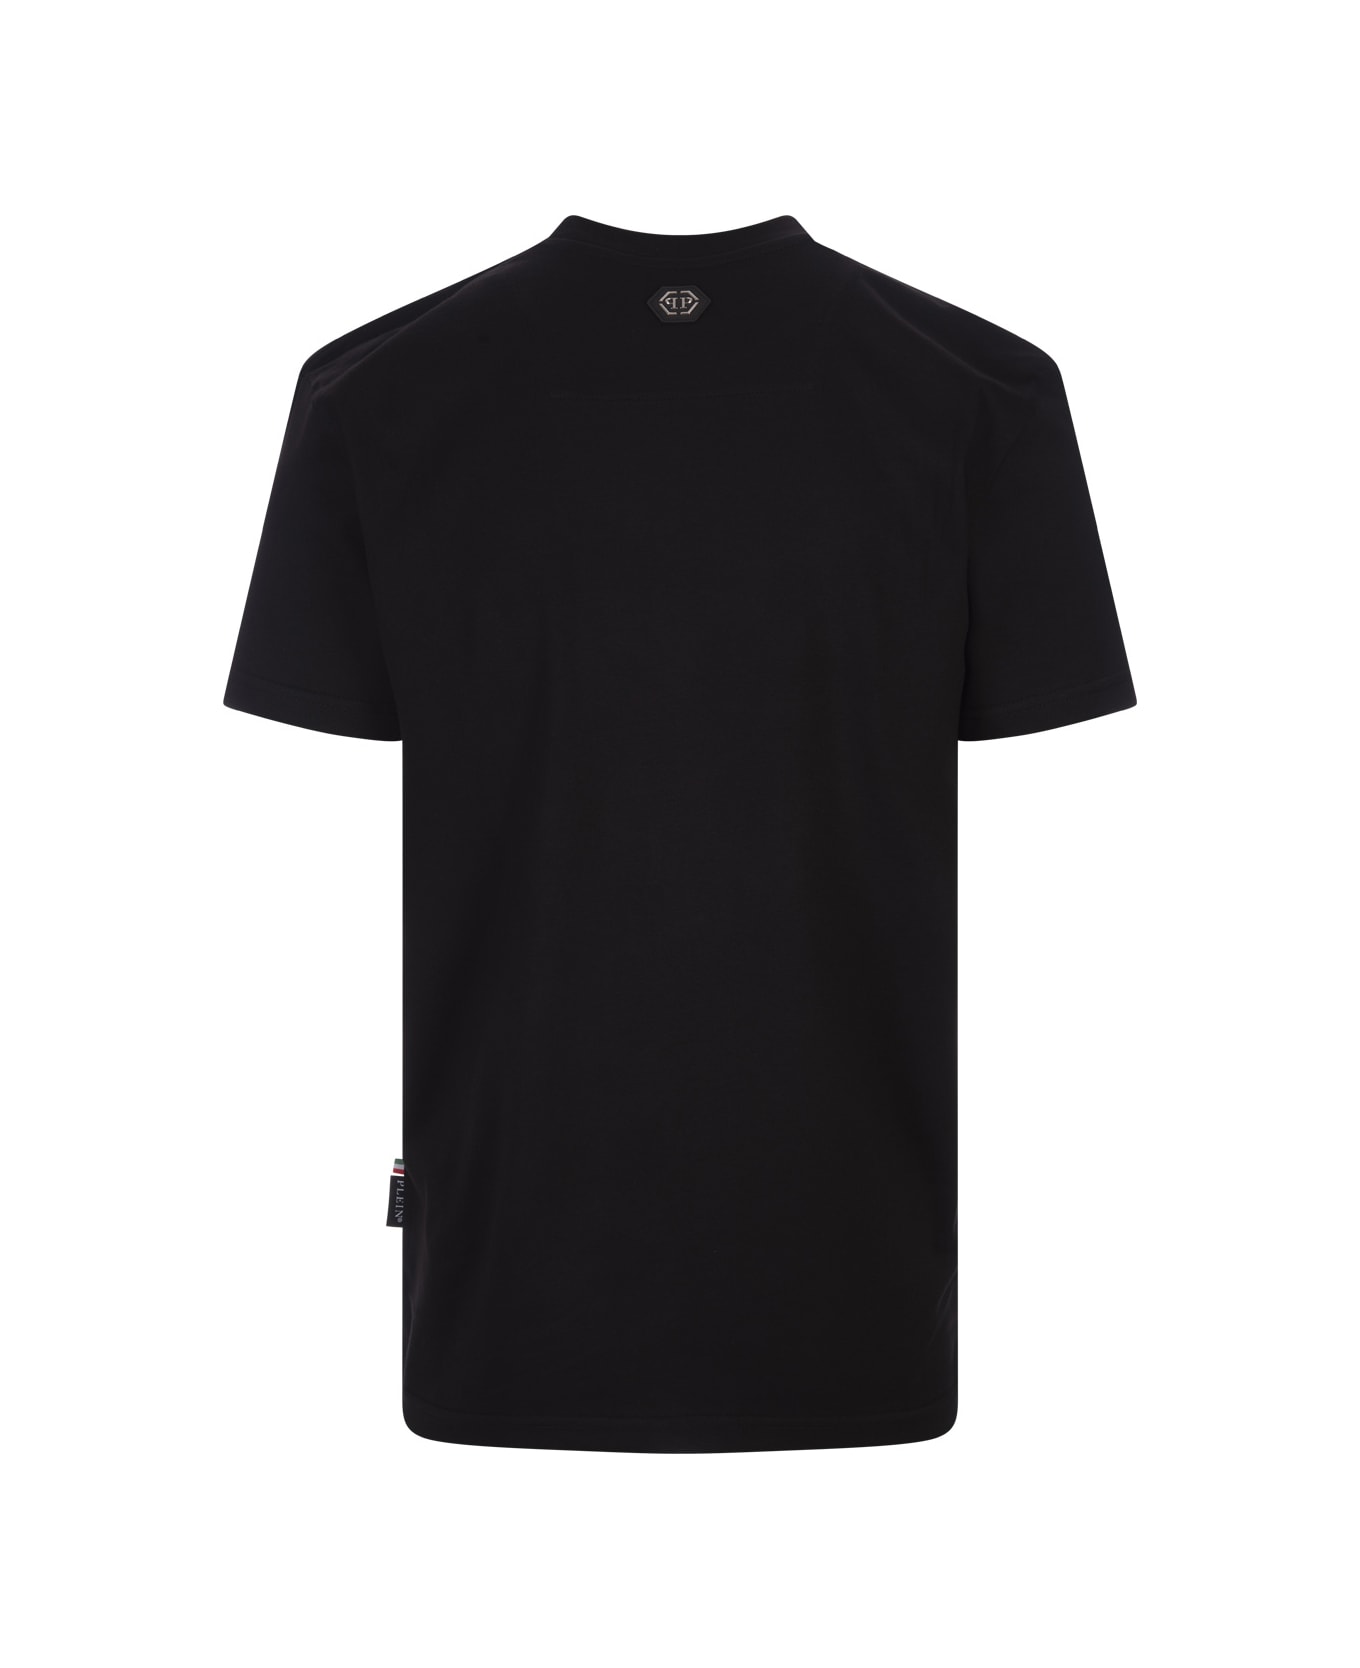 Philipp Plein Black Dripping Skull T-shirt - Black